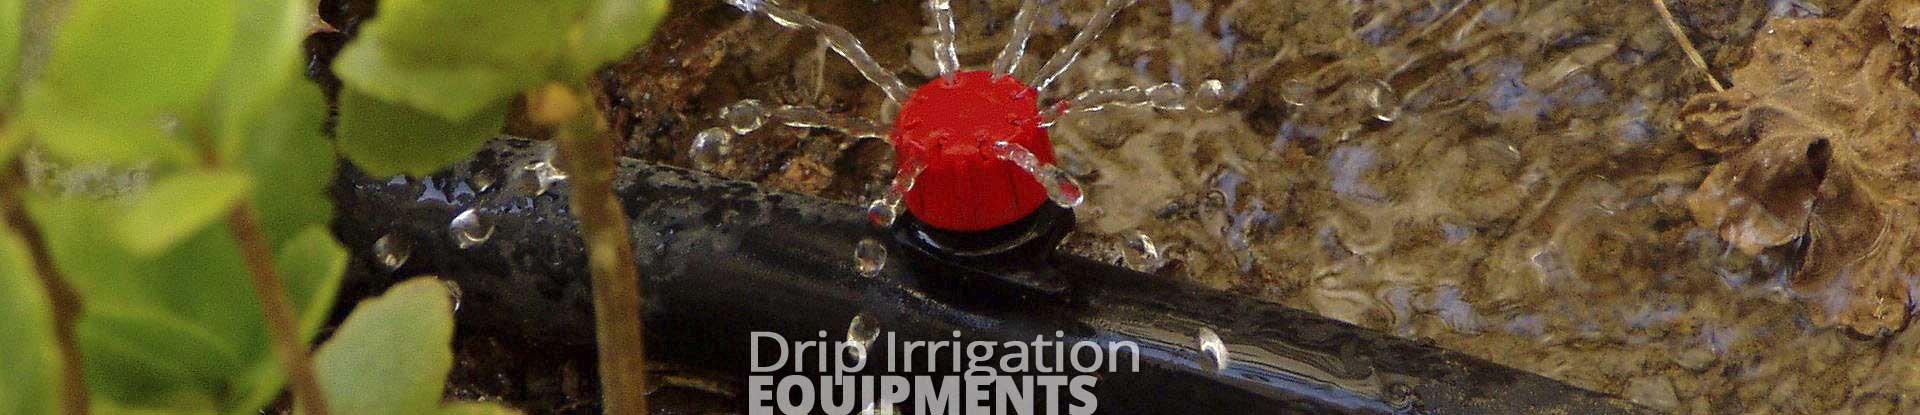 Drip Irrigation System Equipments, Sprinkler Irrigation System, Mini Sprinkler Irrigation System, Venturi Injector, Compression Fittings, Valves, Irrigation Filters, Irrigation Lateral